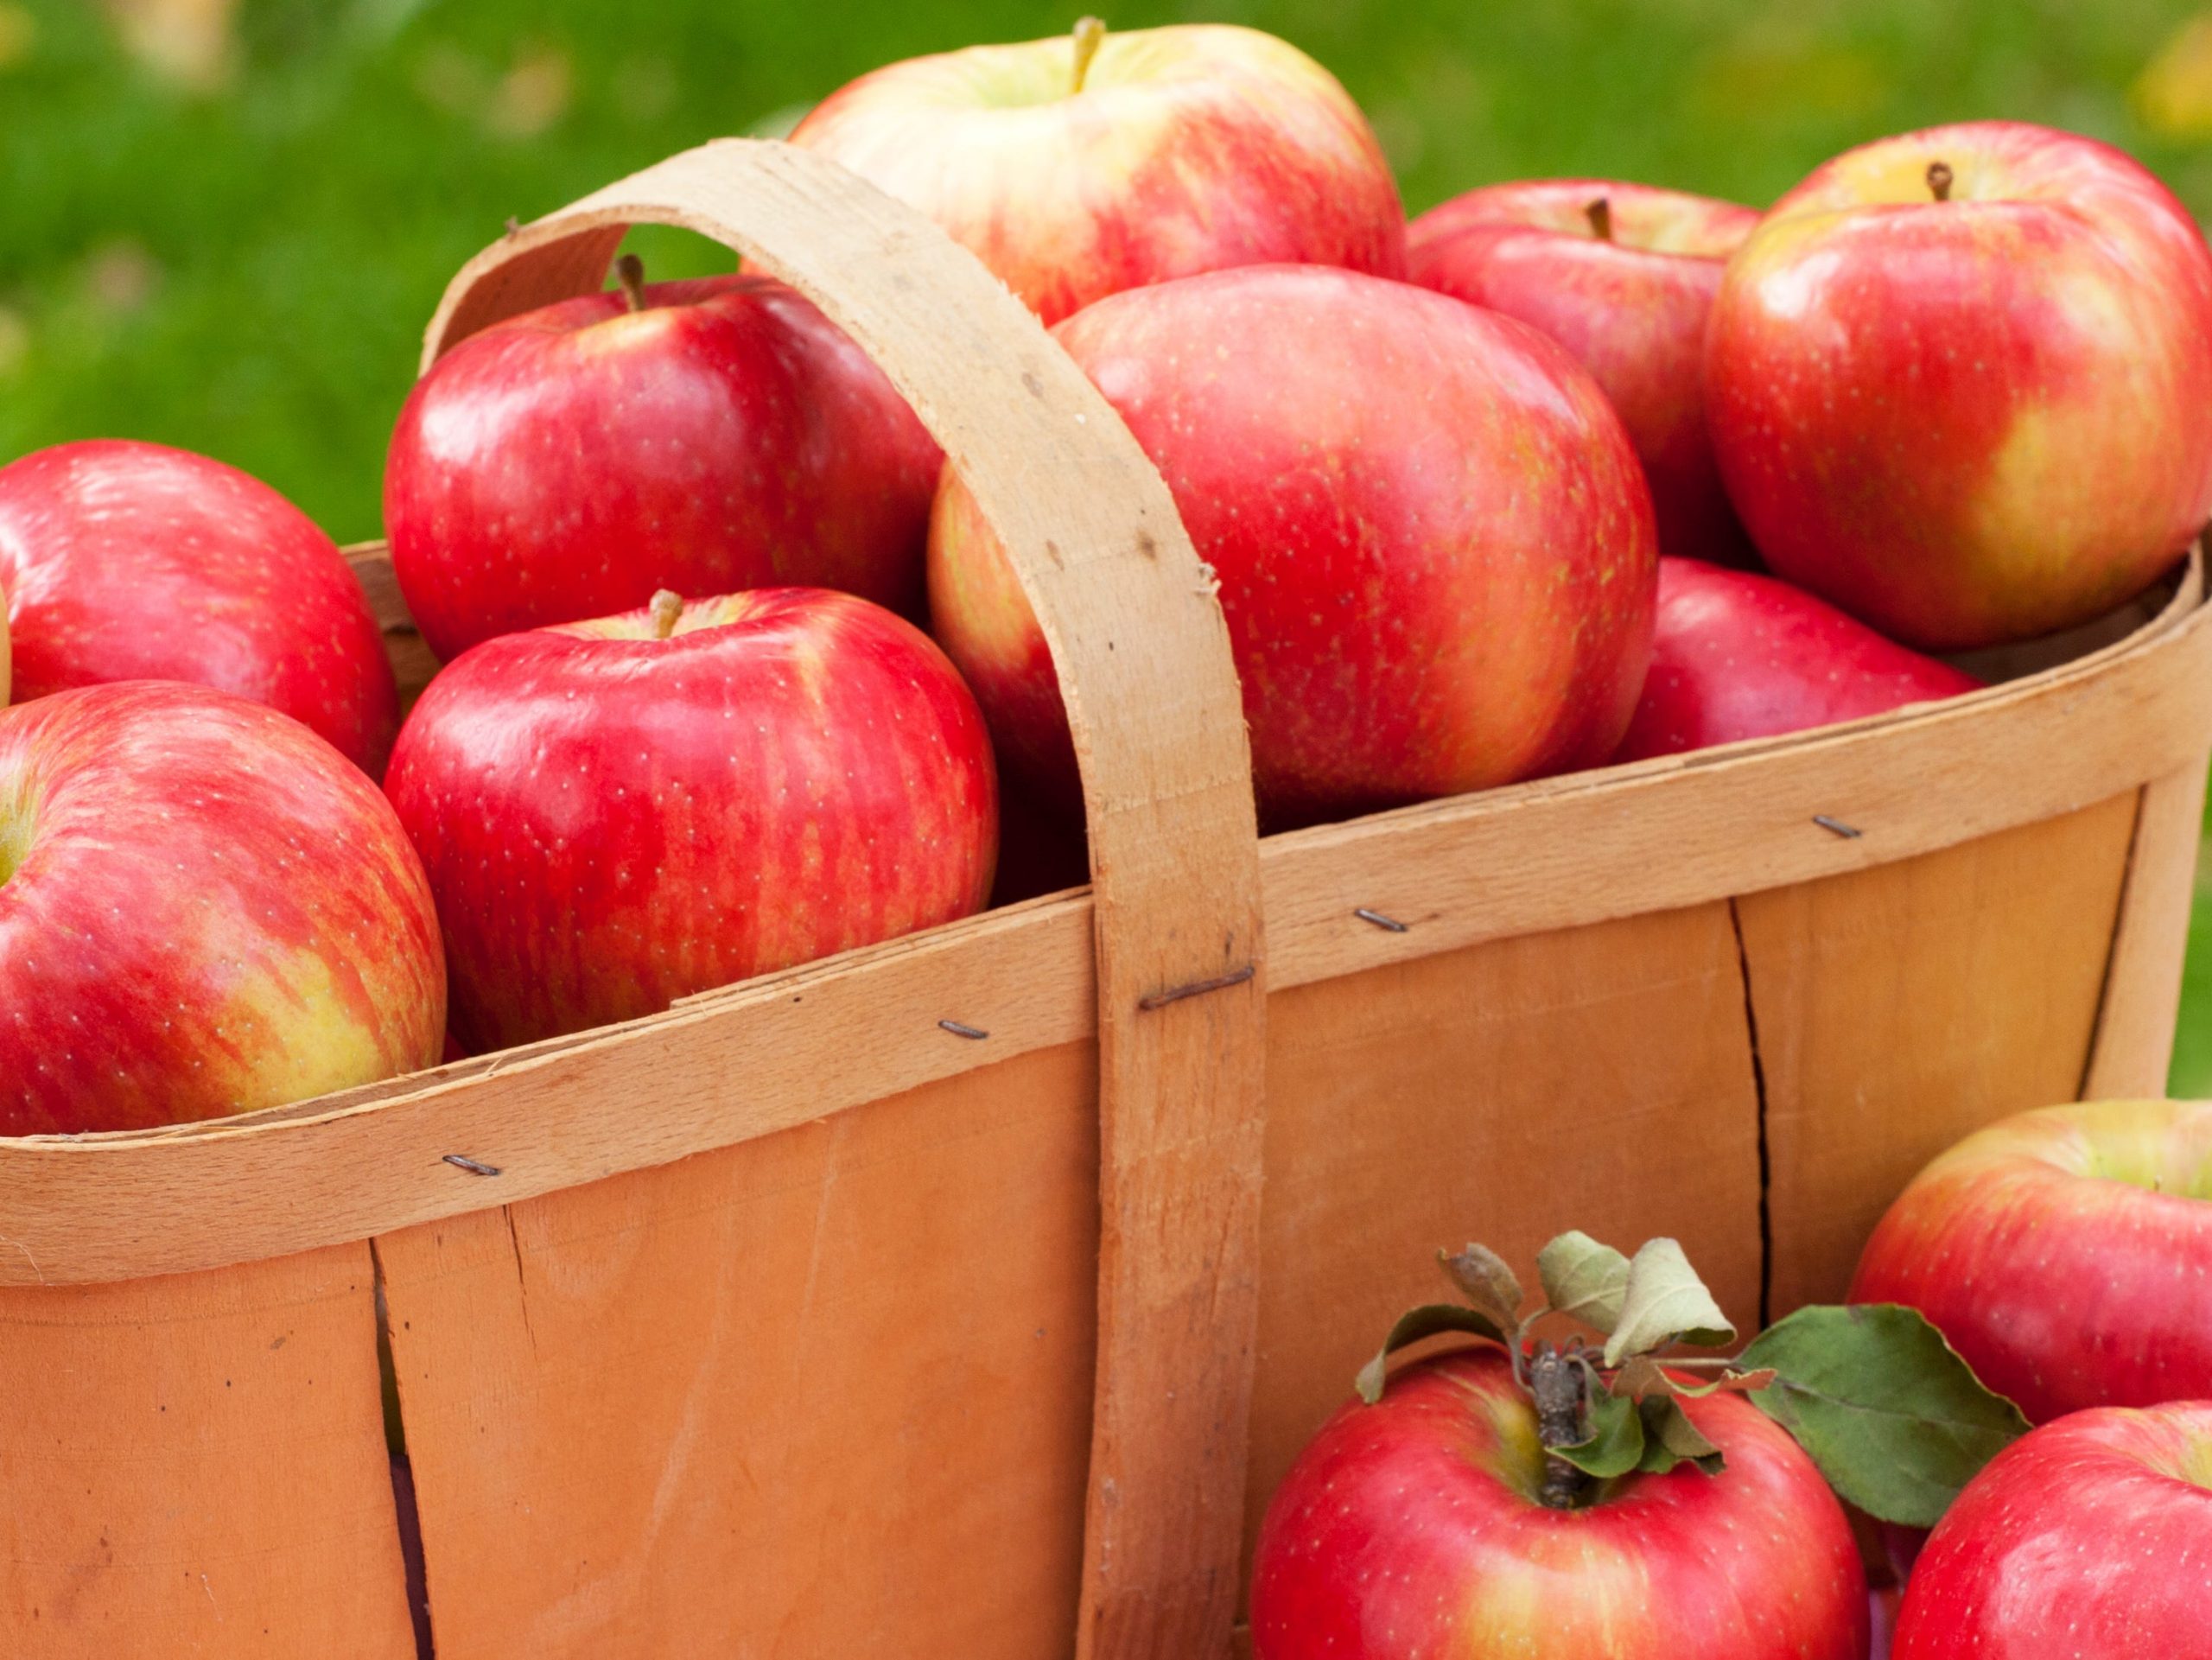 Honeycrisp apples in a basket.